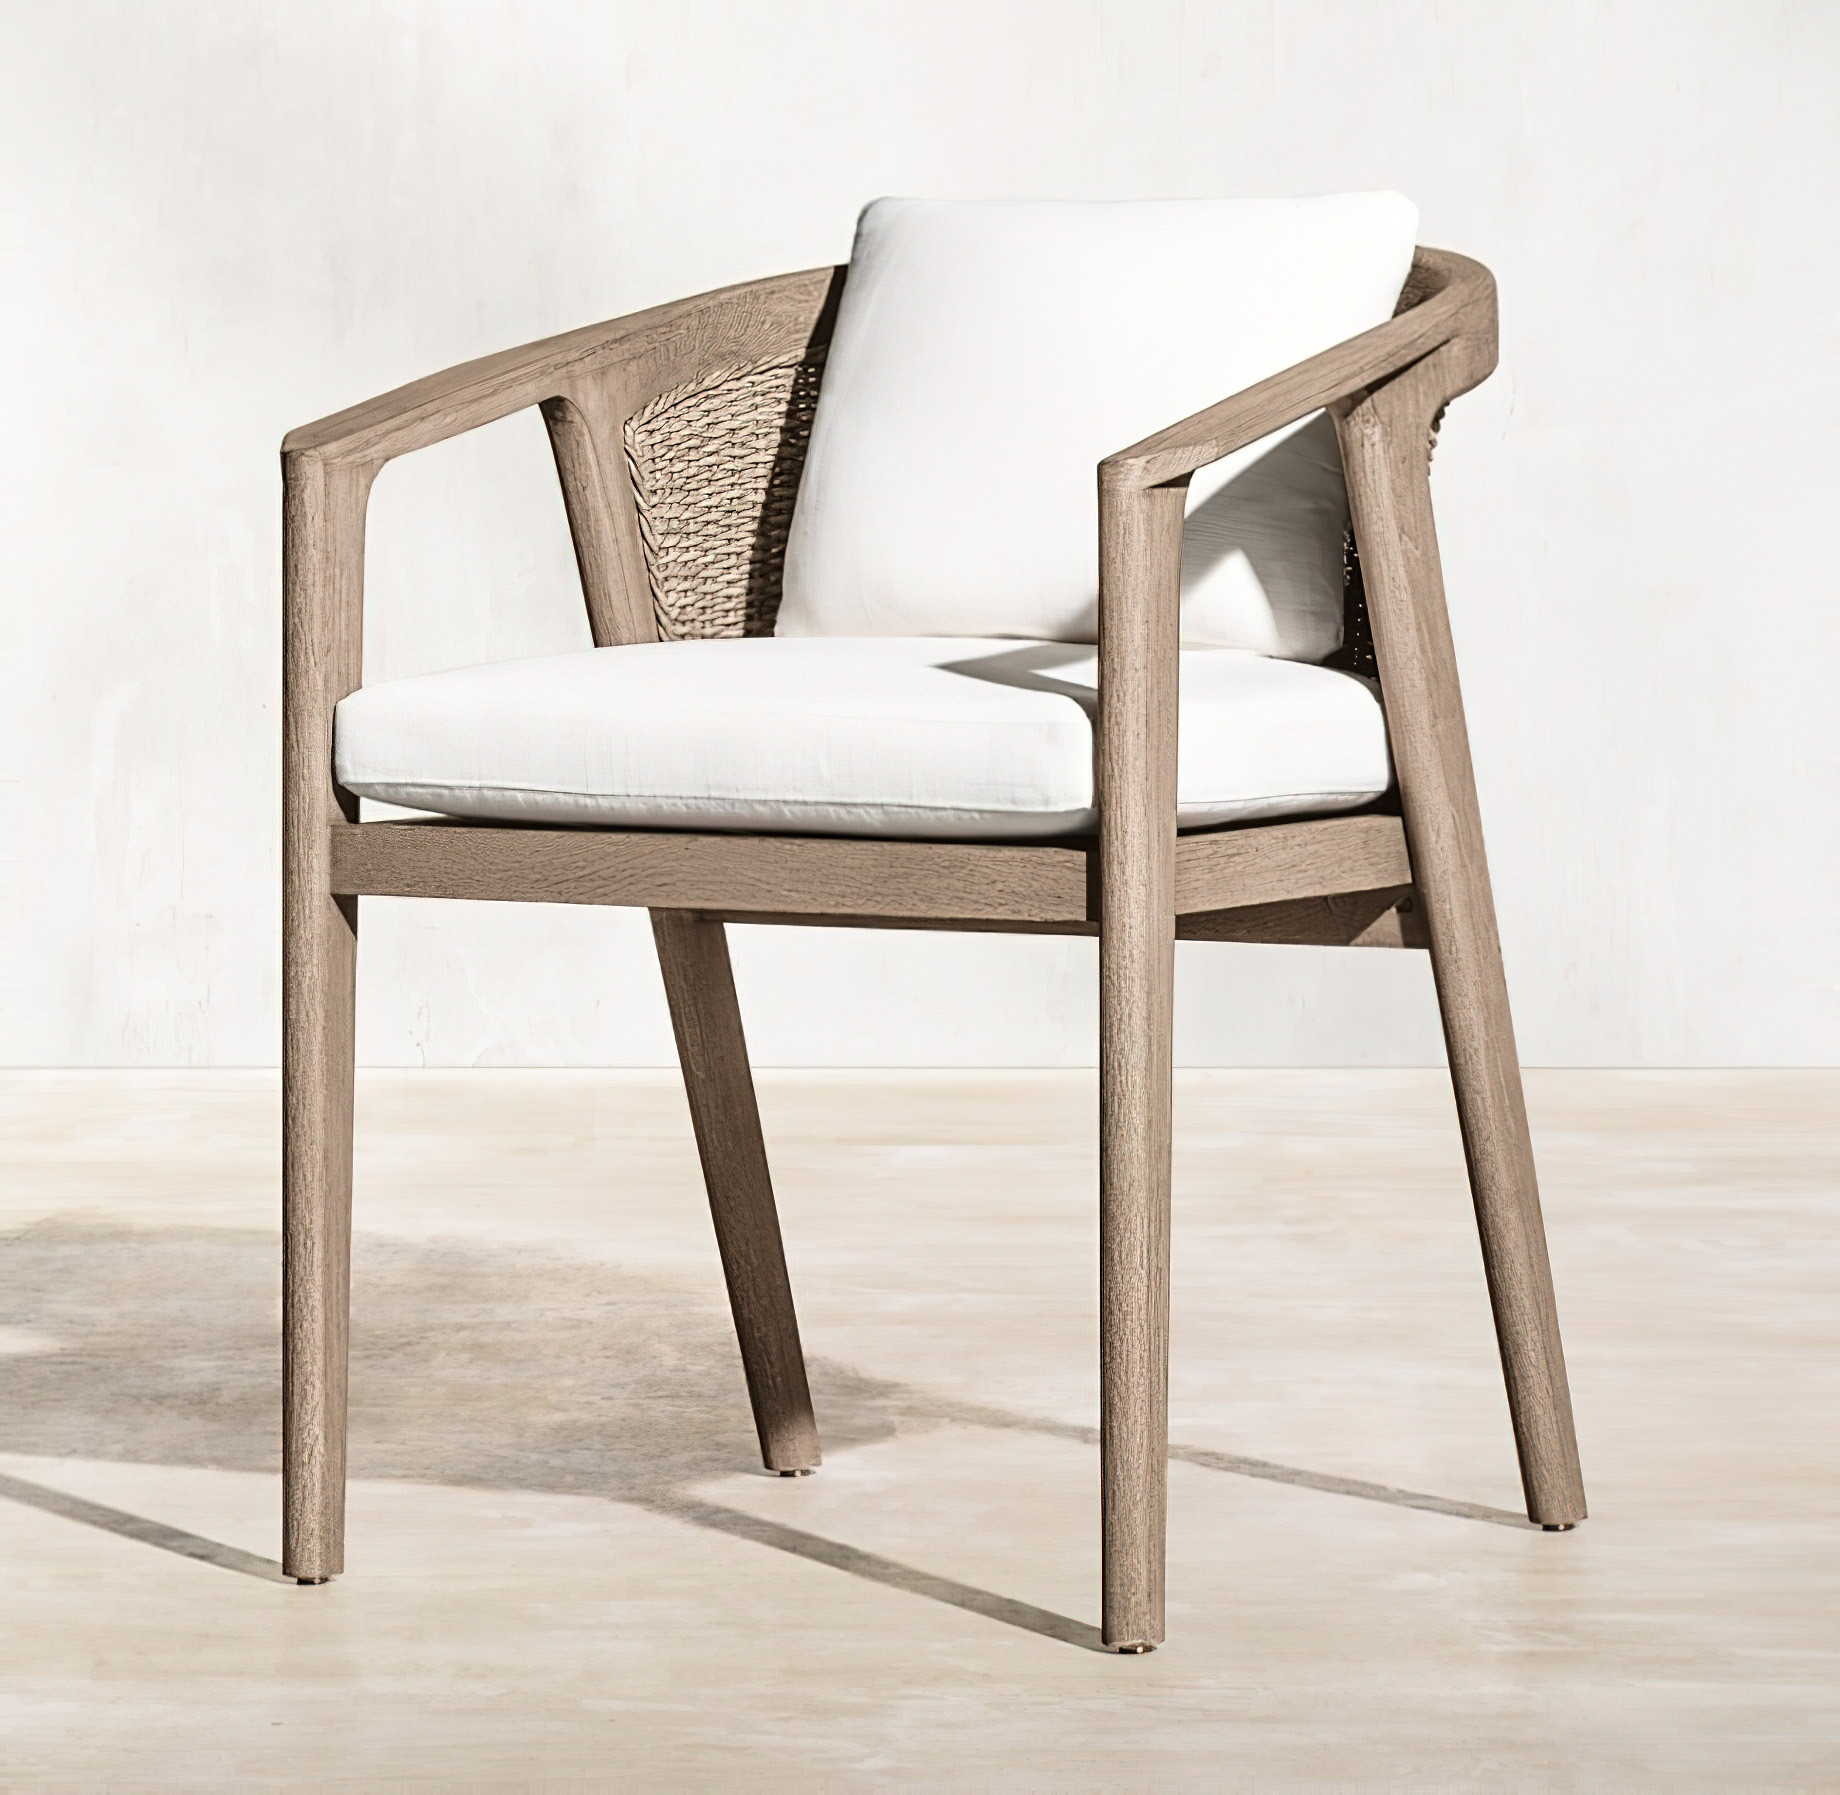 Malta Teak Collection Outdoor Furniture Design for RH - Ramon Esteve - Malta Teak Armchair